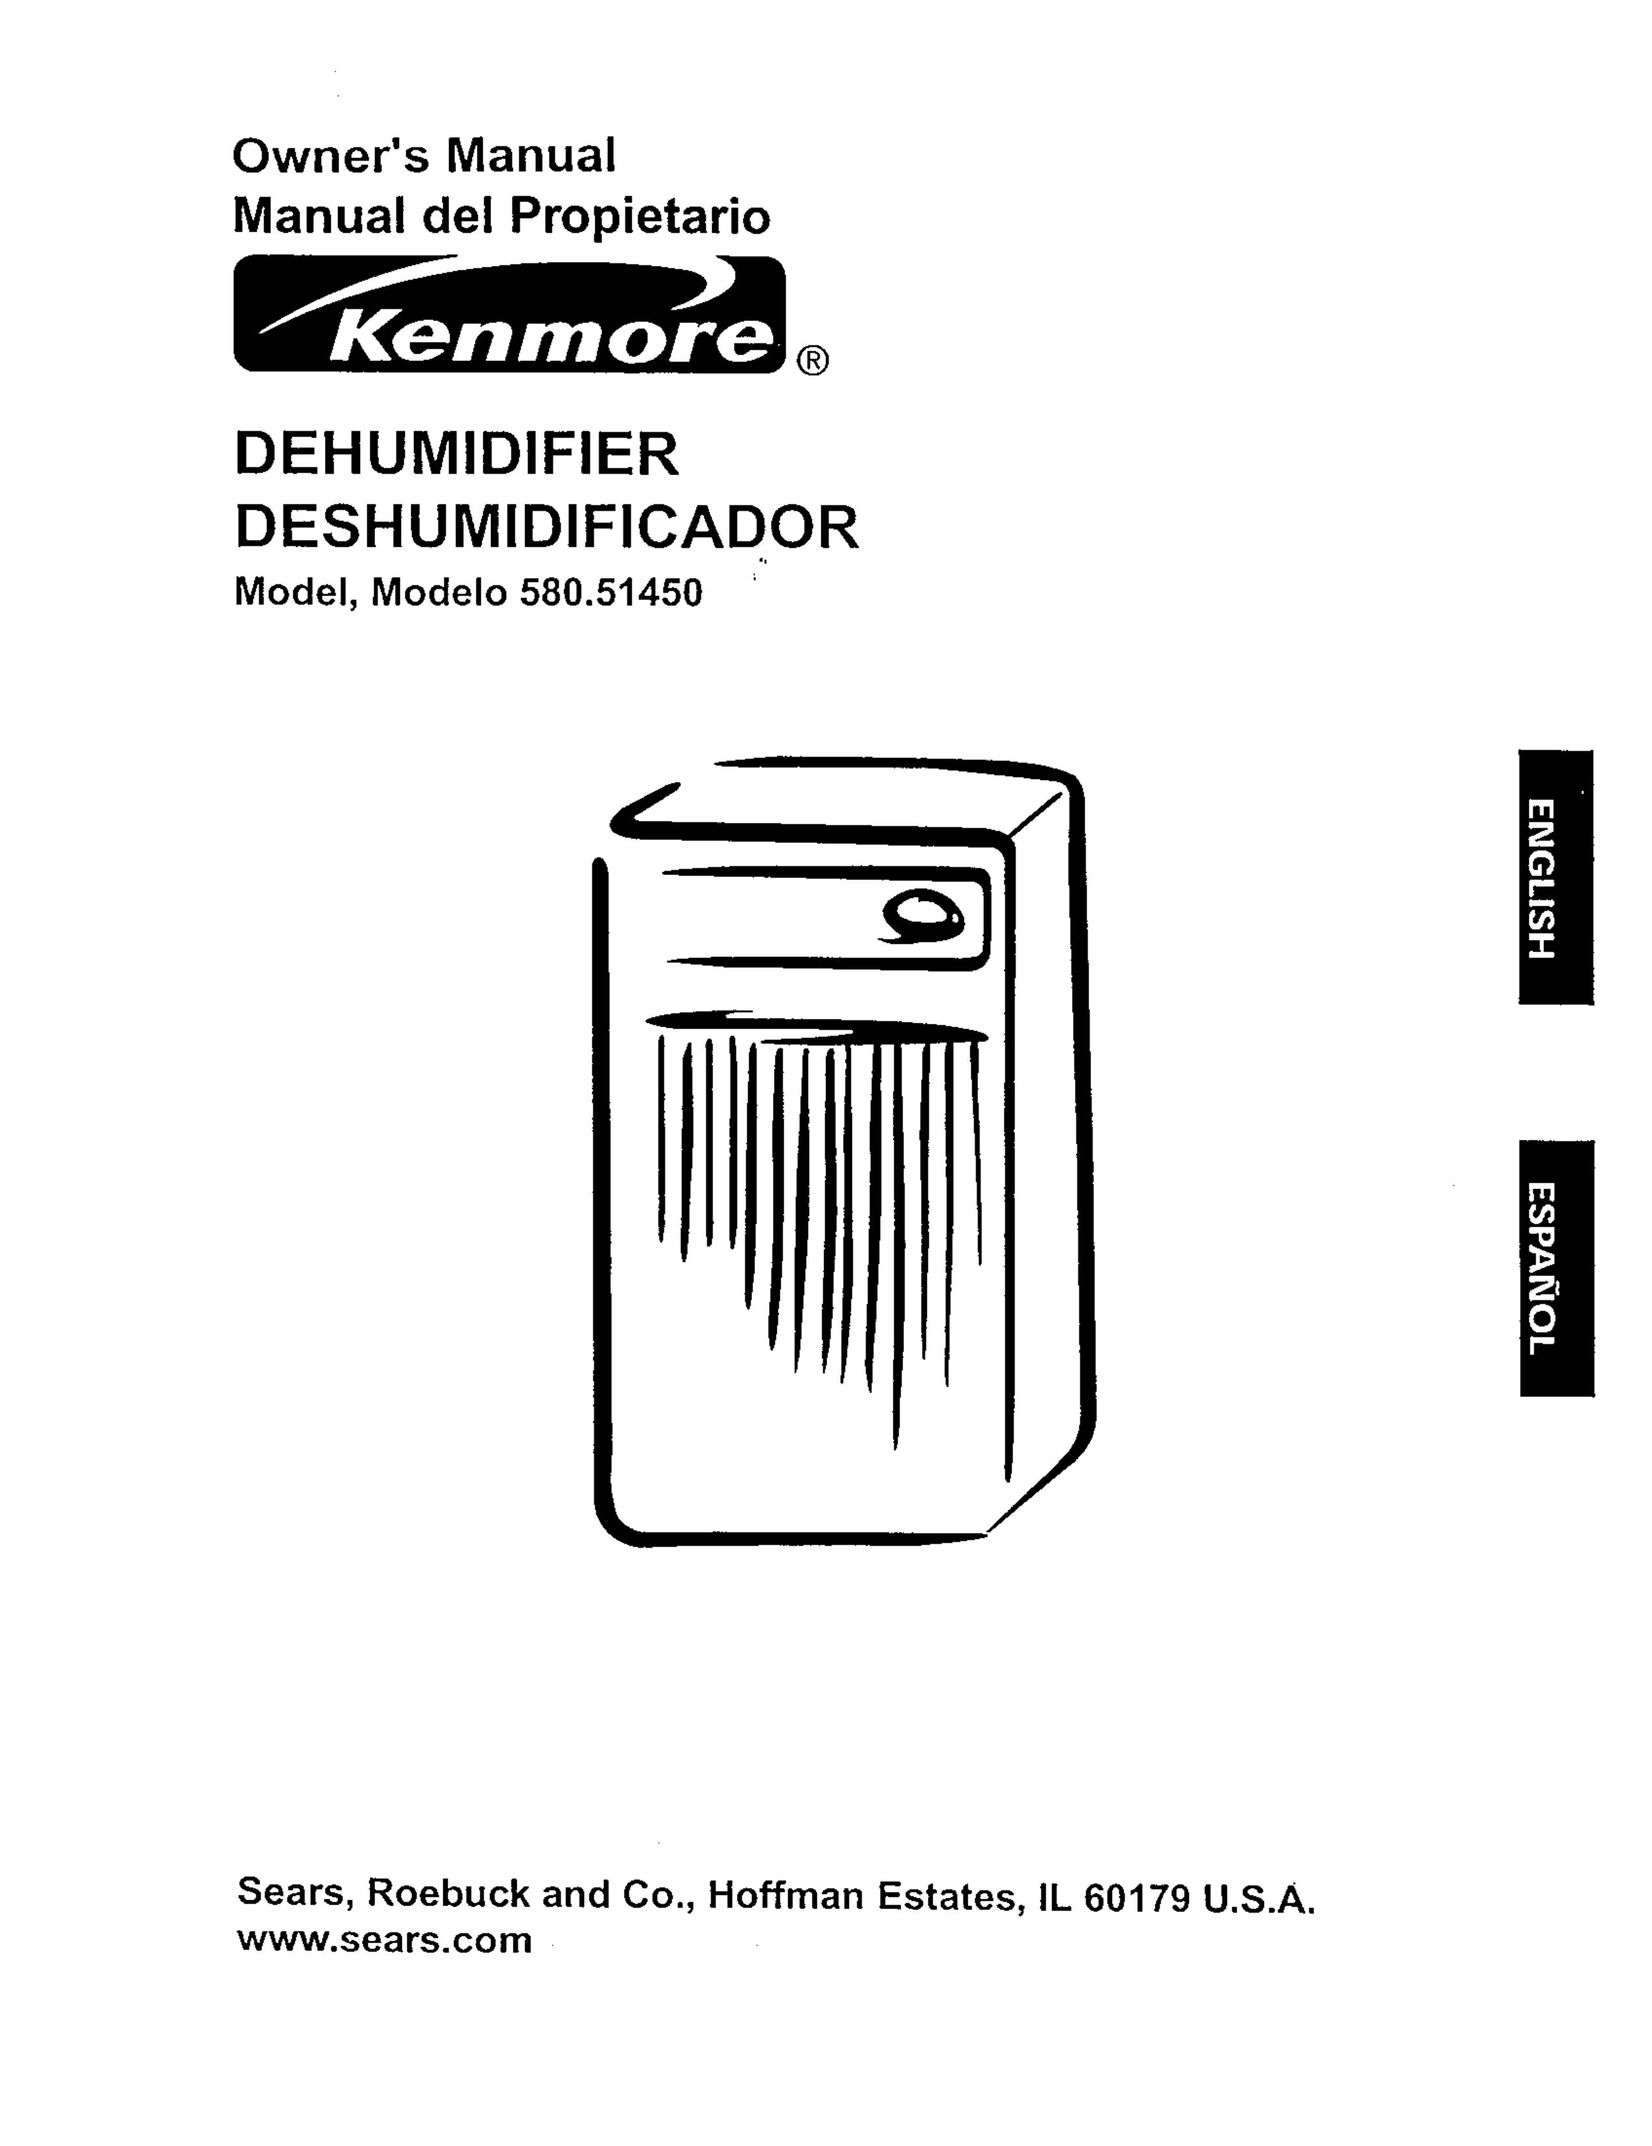 Kenmore 580.5145 Dehumidifier User Manual